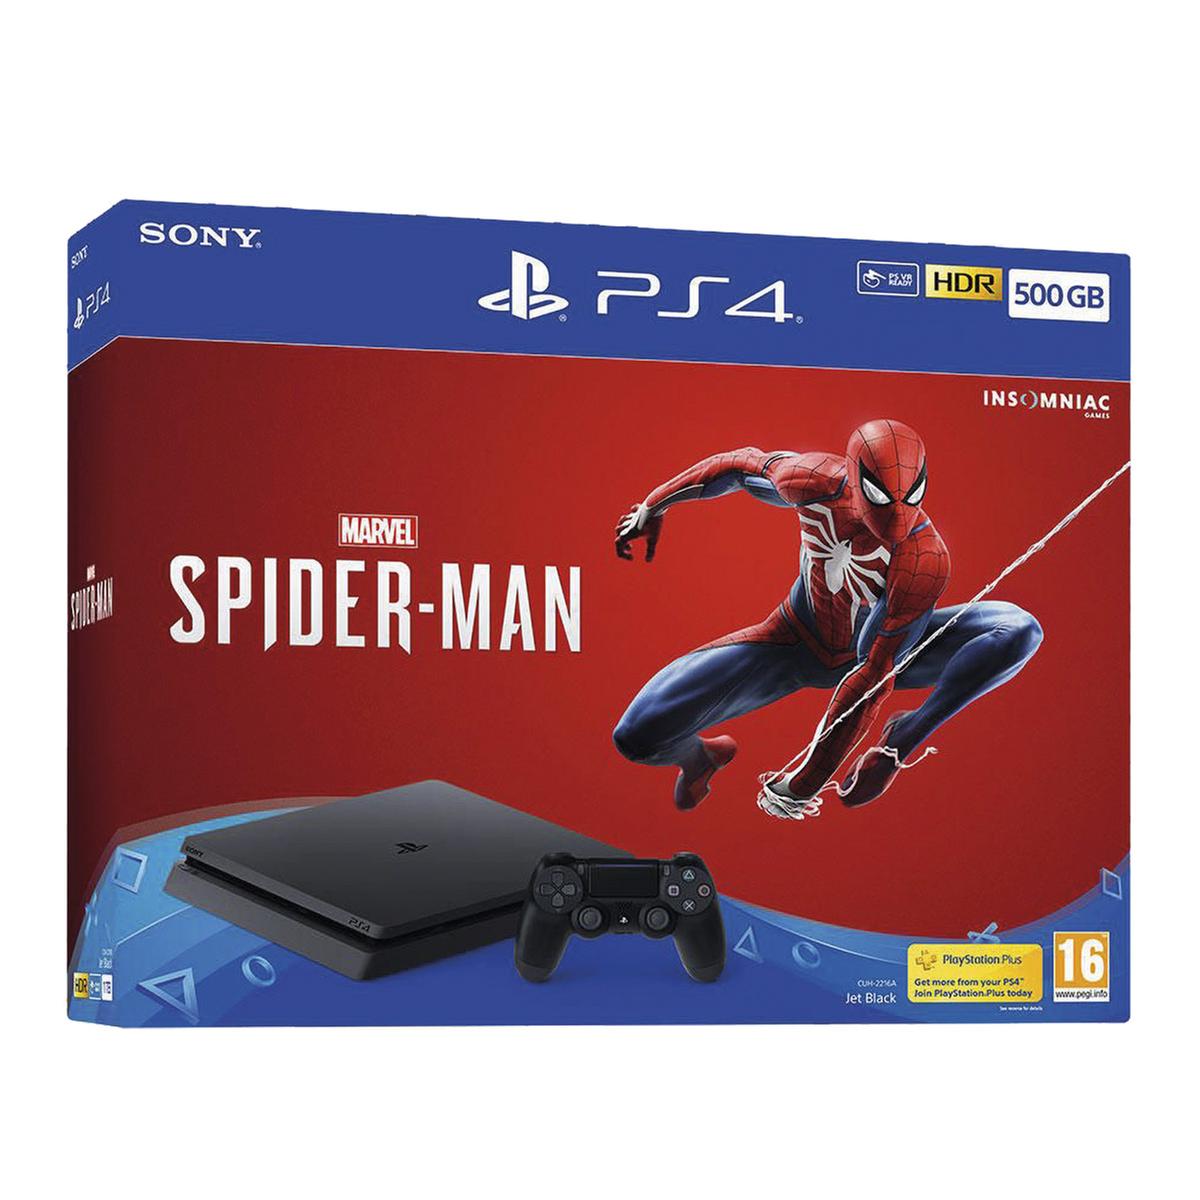 PS4 - Consola PlayStation 4 Slim 500 GB Black com Jogo Spider-Man |  PlayStation | Loja de brinquedos e videojogos Online Toysrus